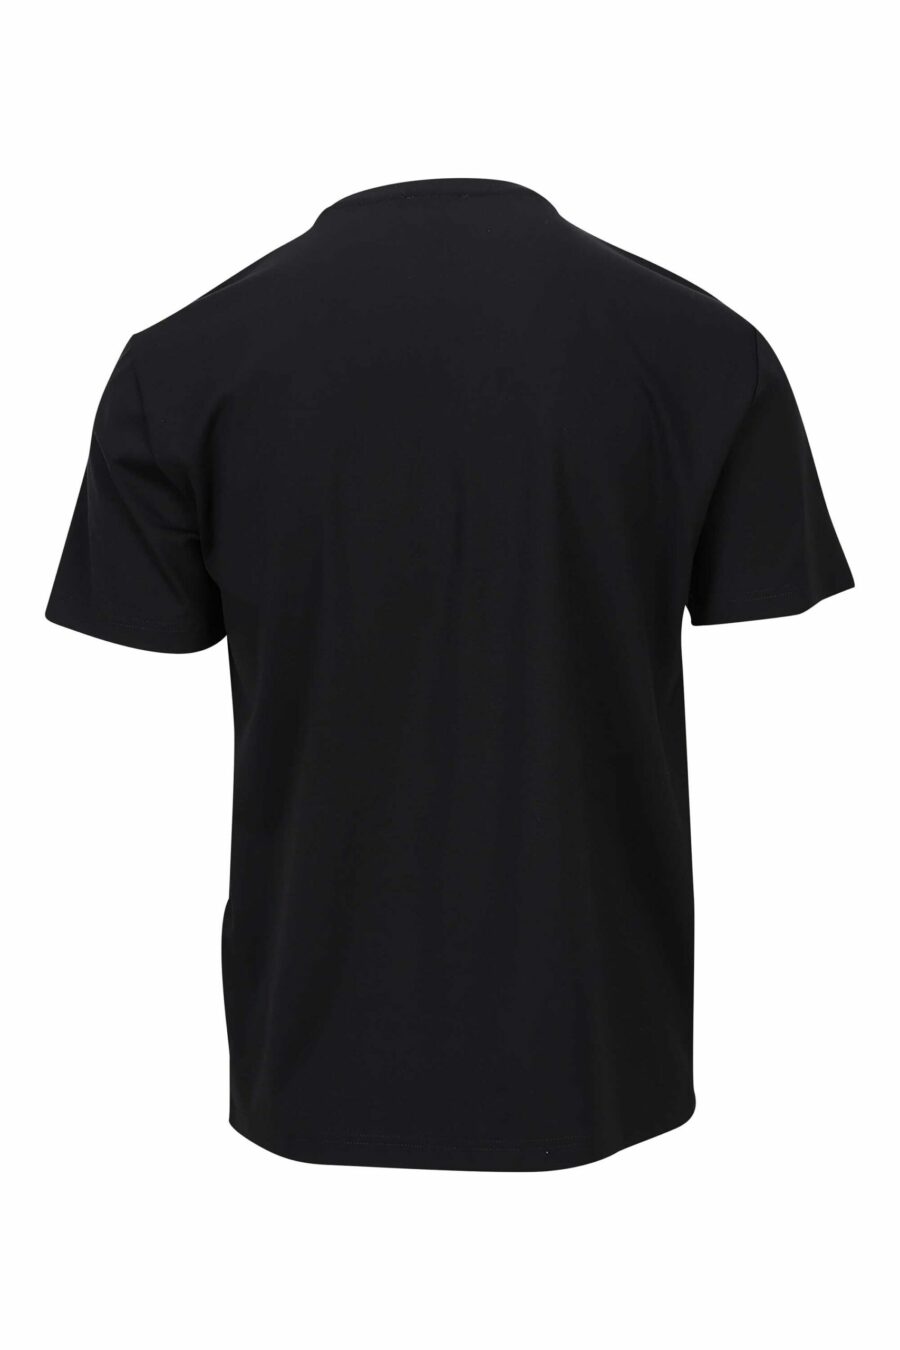 T-shirt noir avec maxilogo monochrome "lux identity" - 8057767688646 1 scaled